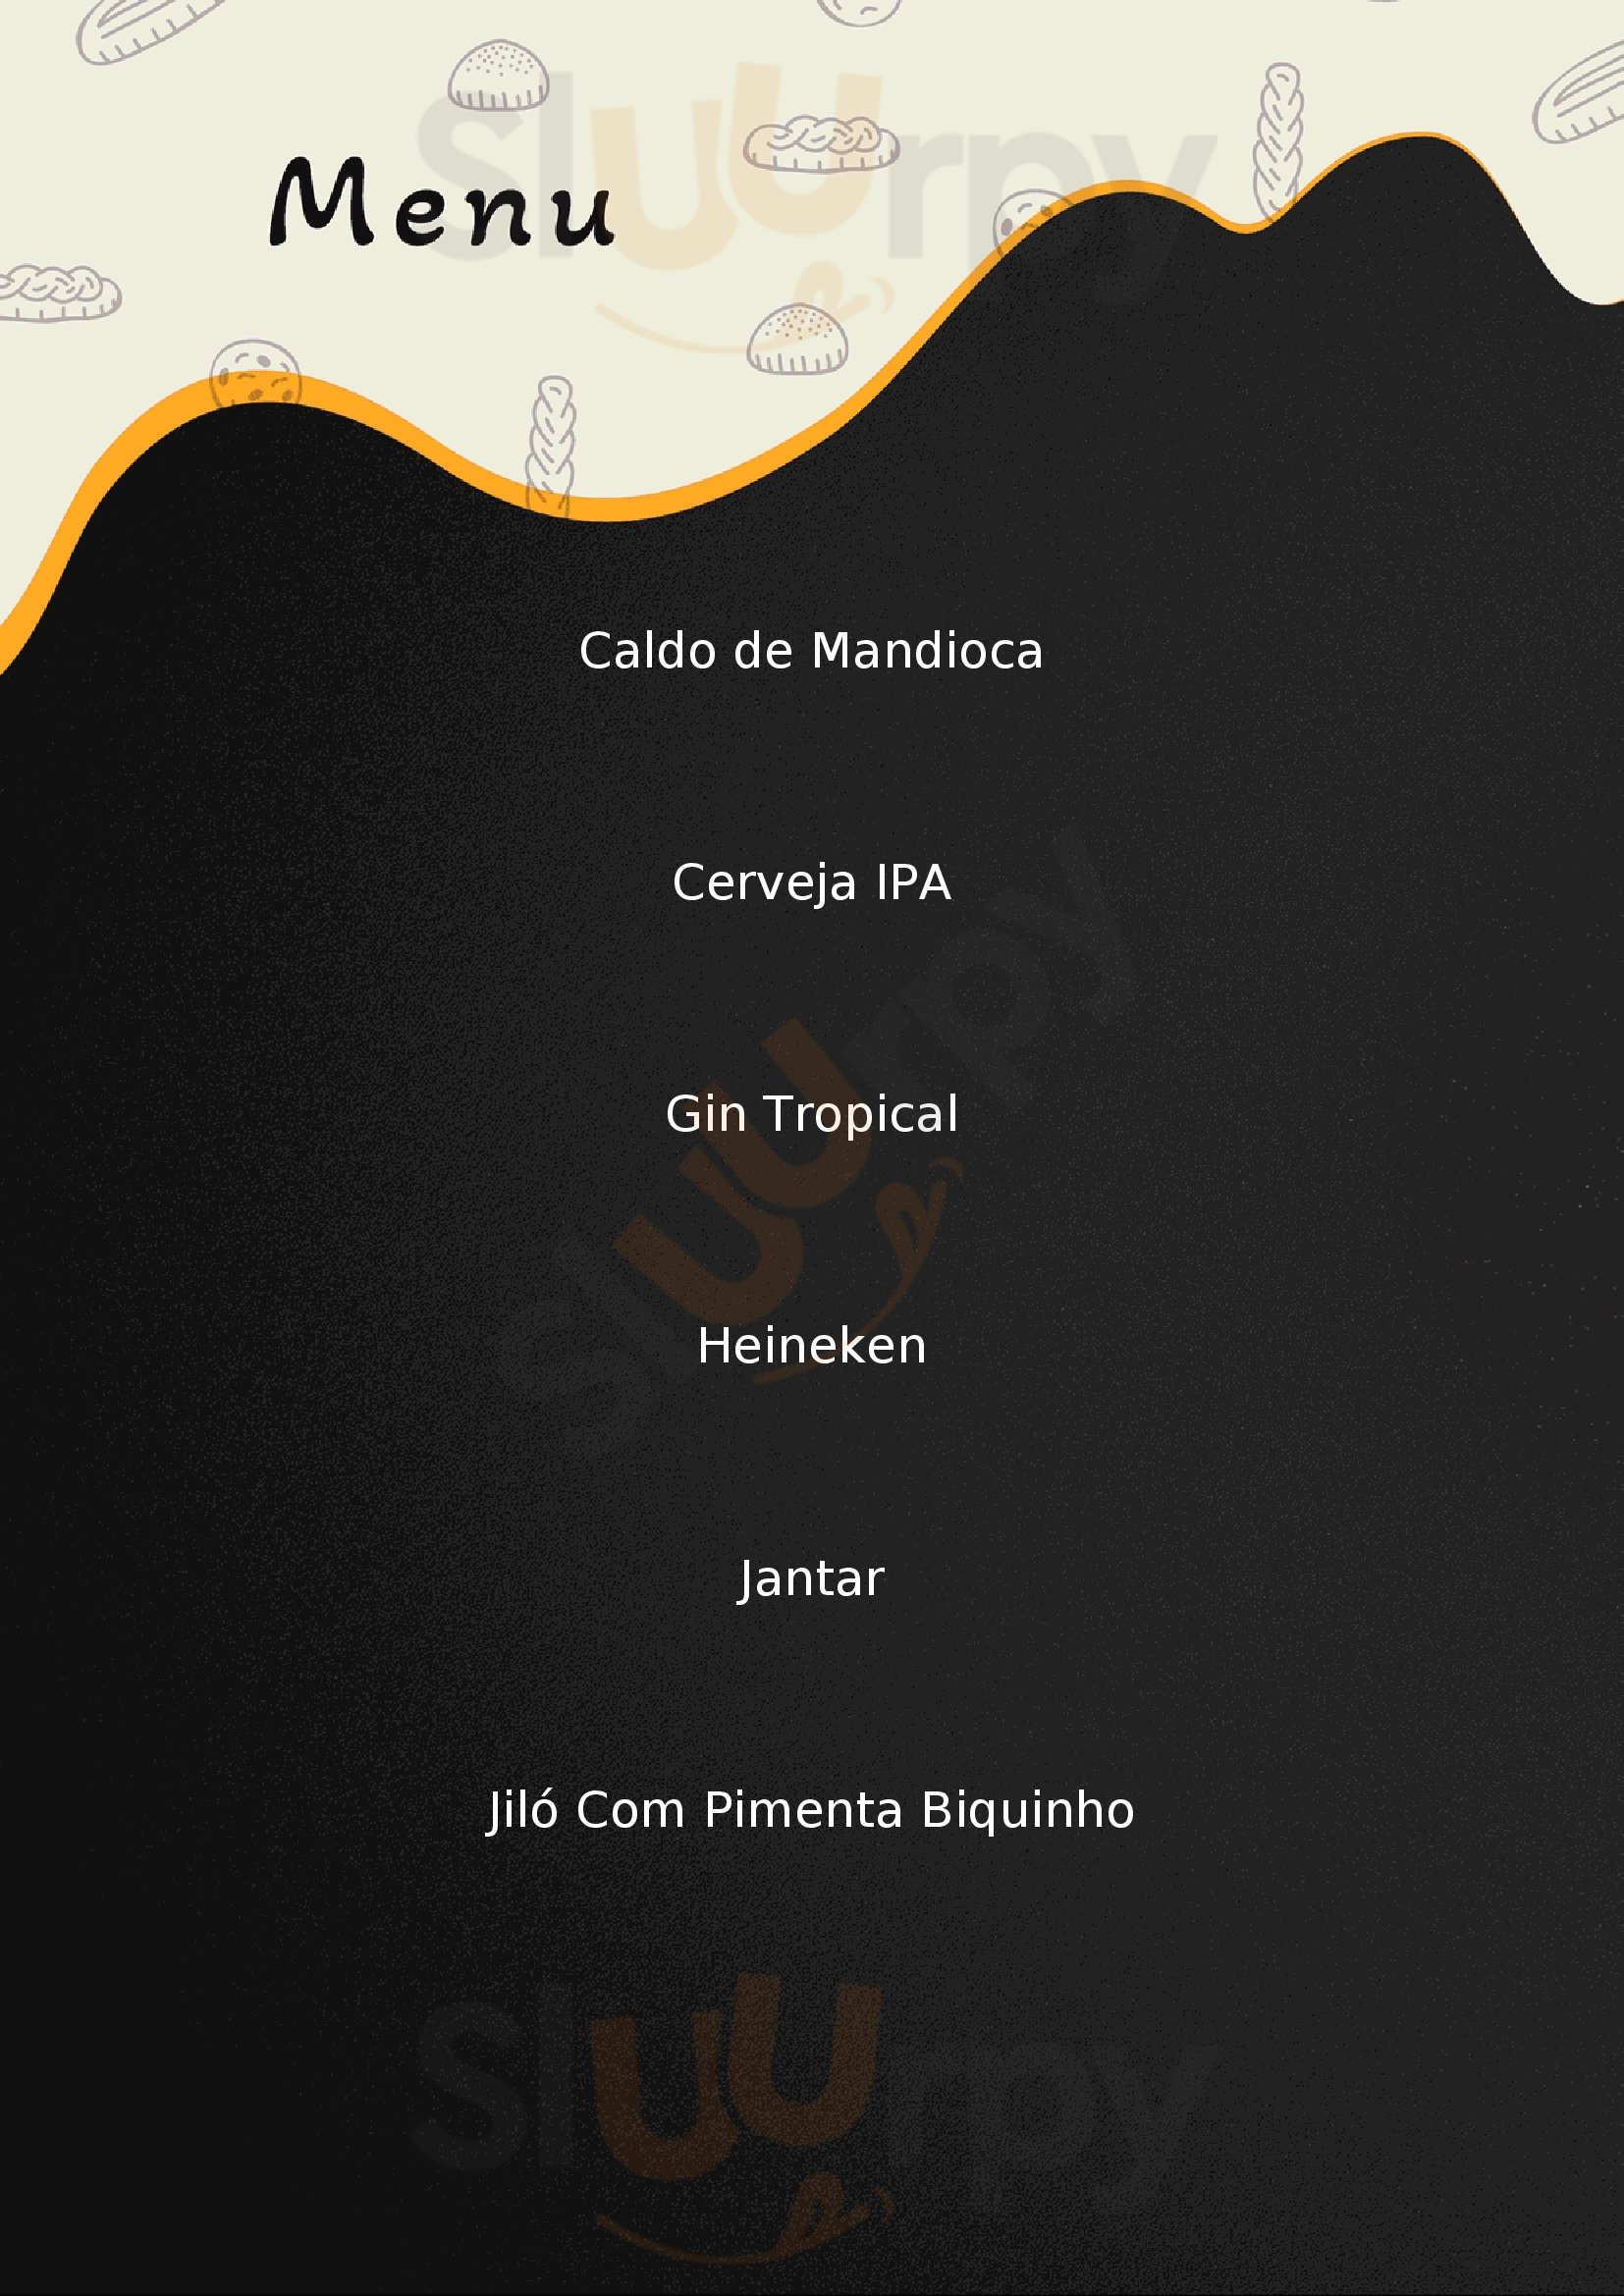 Chacara Grill Belo Horizonte Menu - 1